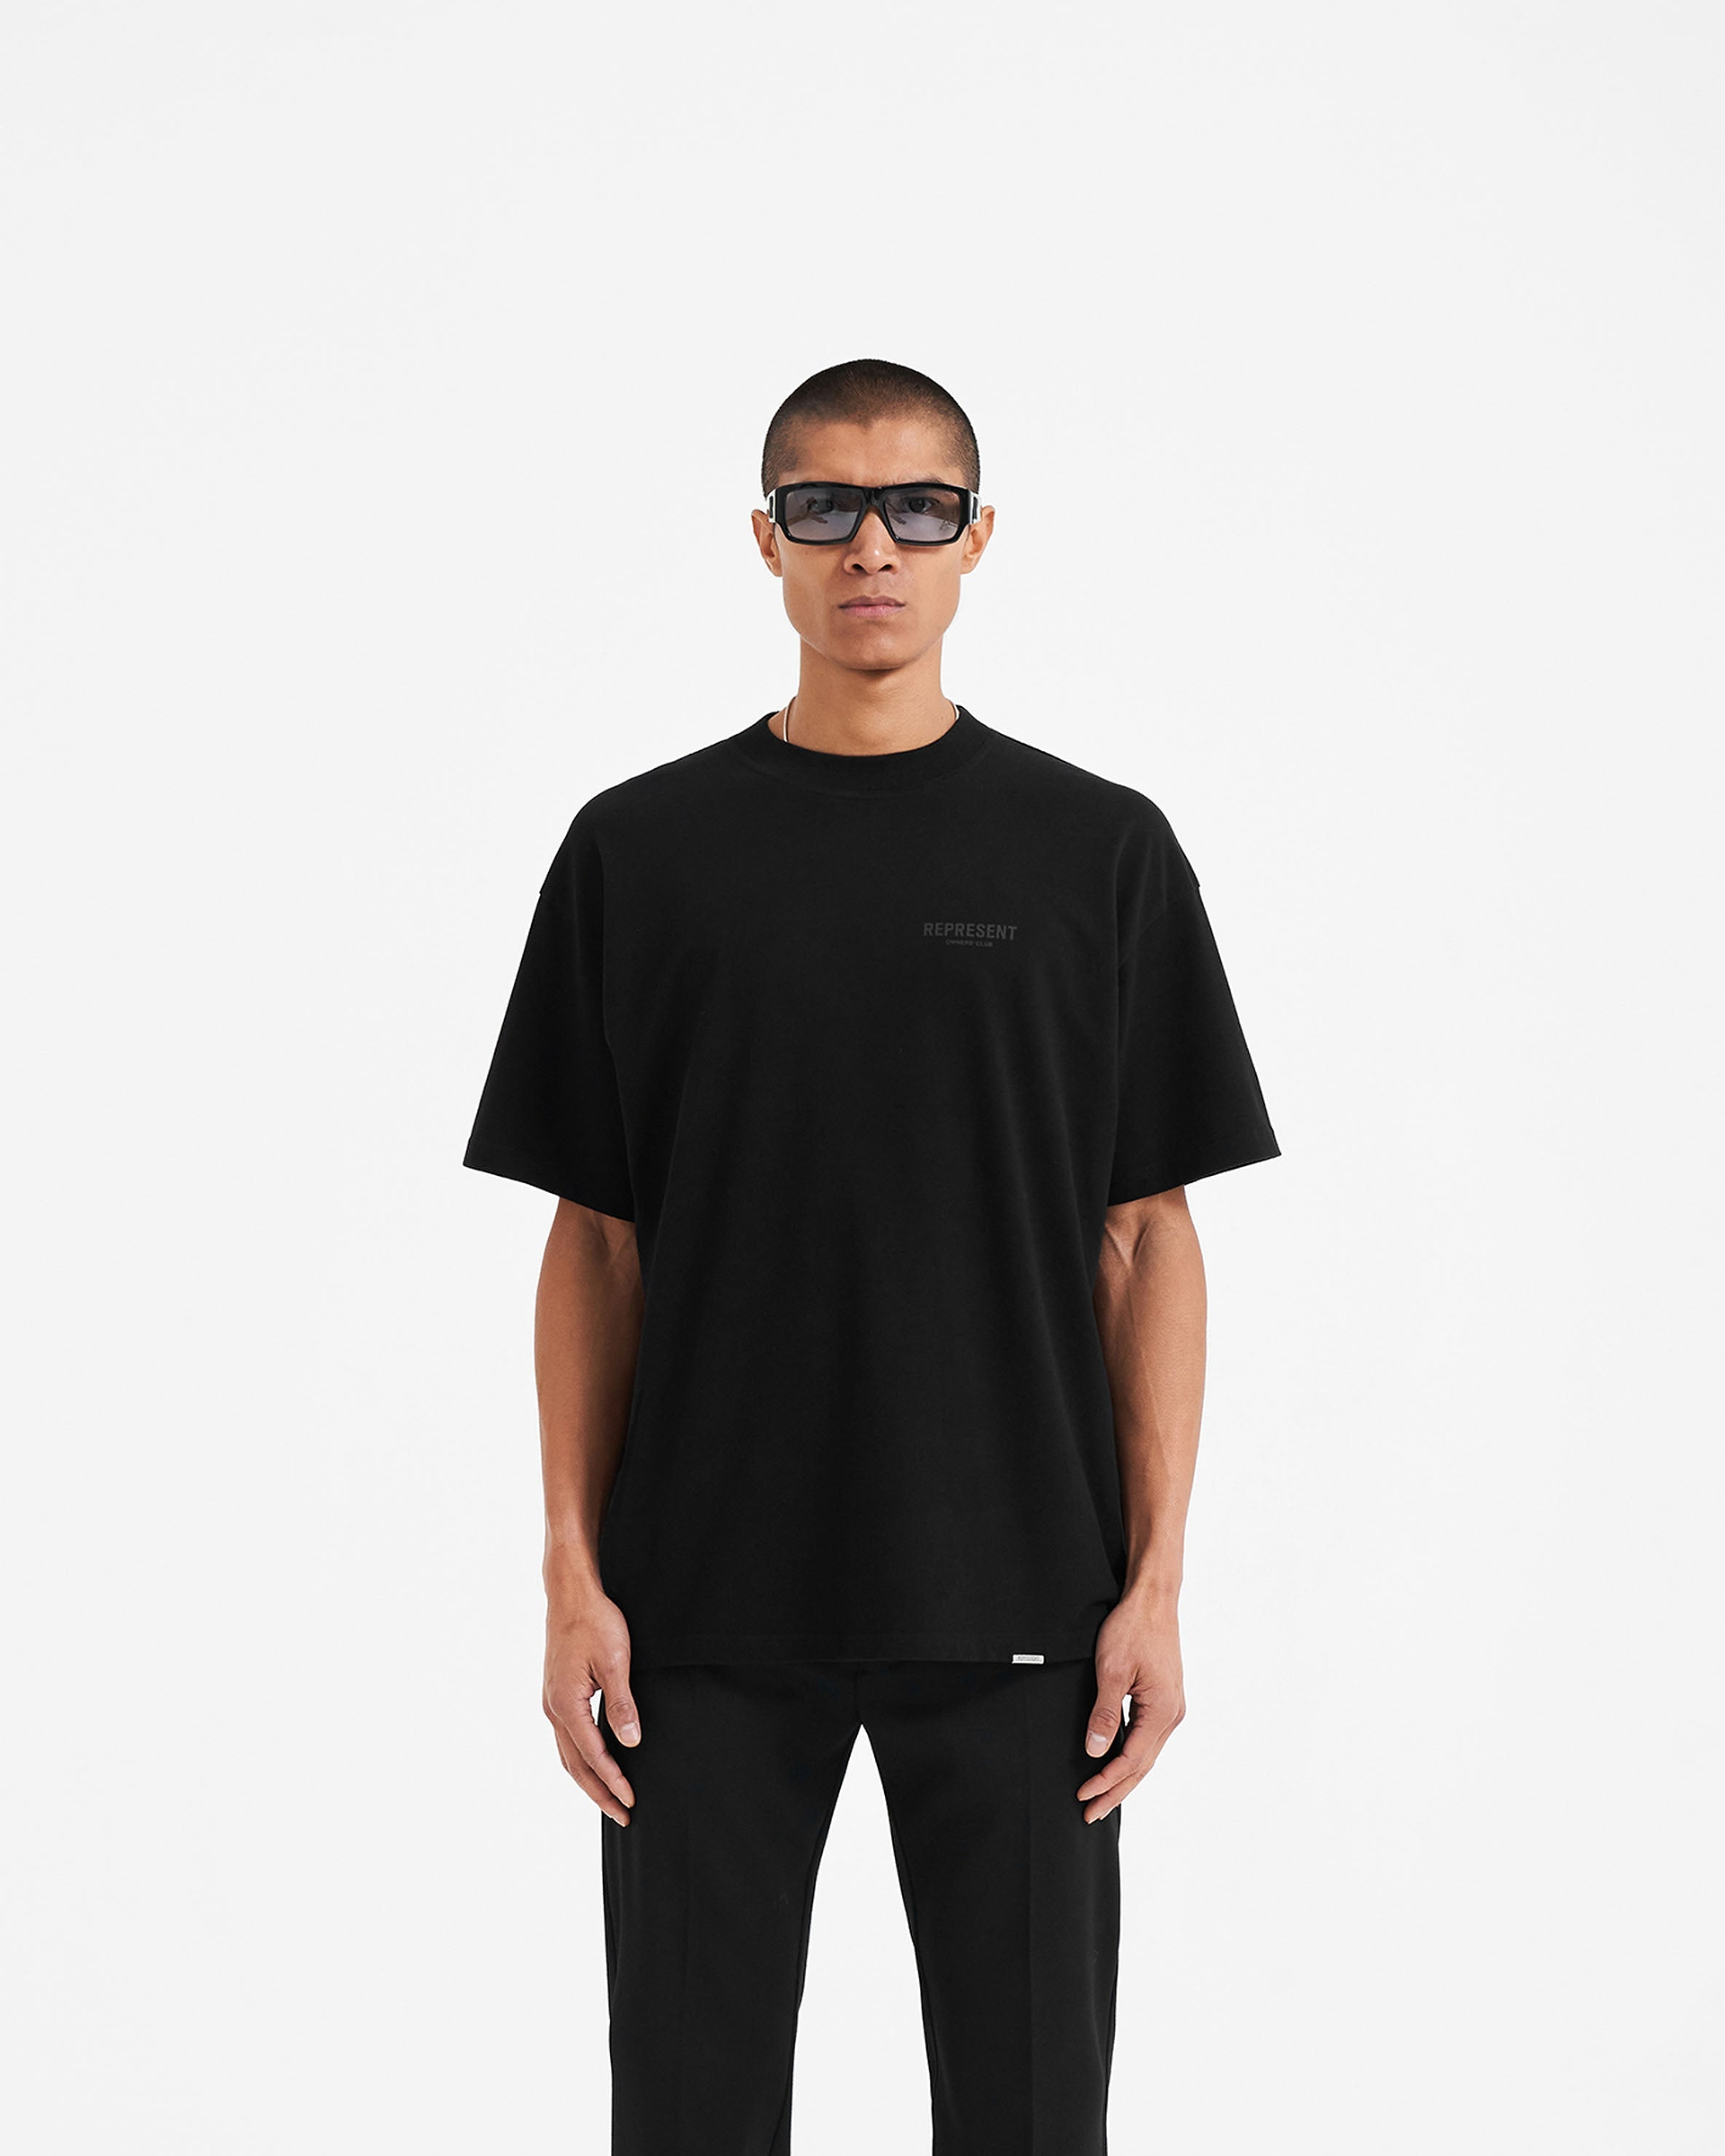 Black Reflective T-Shirt | Owners' Club | REPRESENT CLO